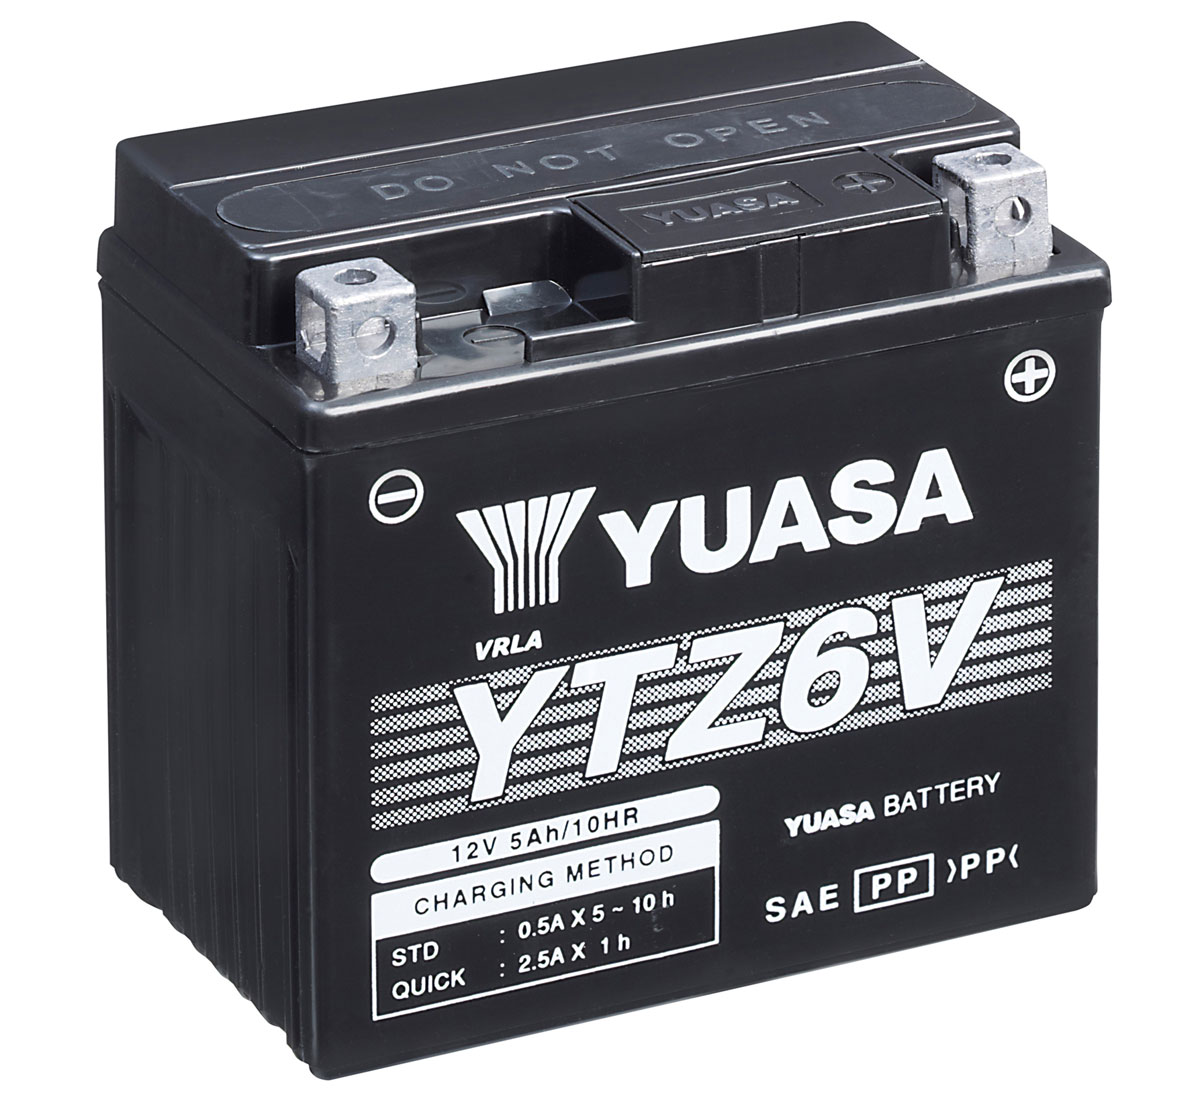 Yuasa YTZ6 12v 5Ah Motorbike Battery